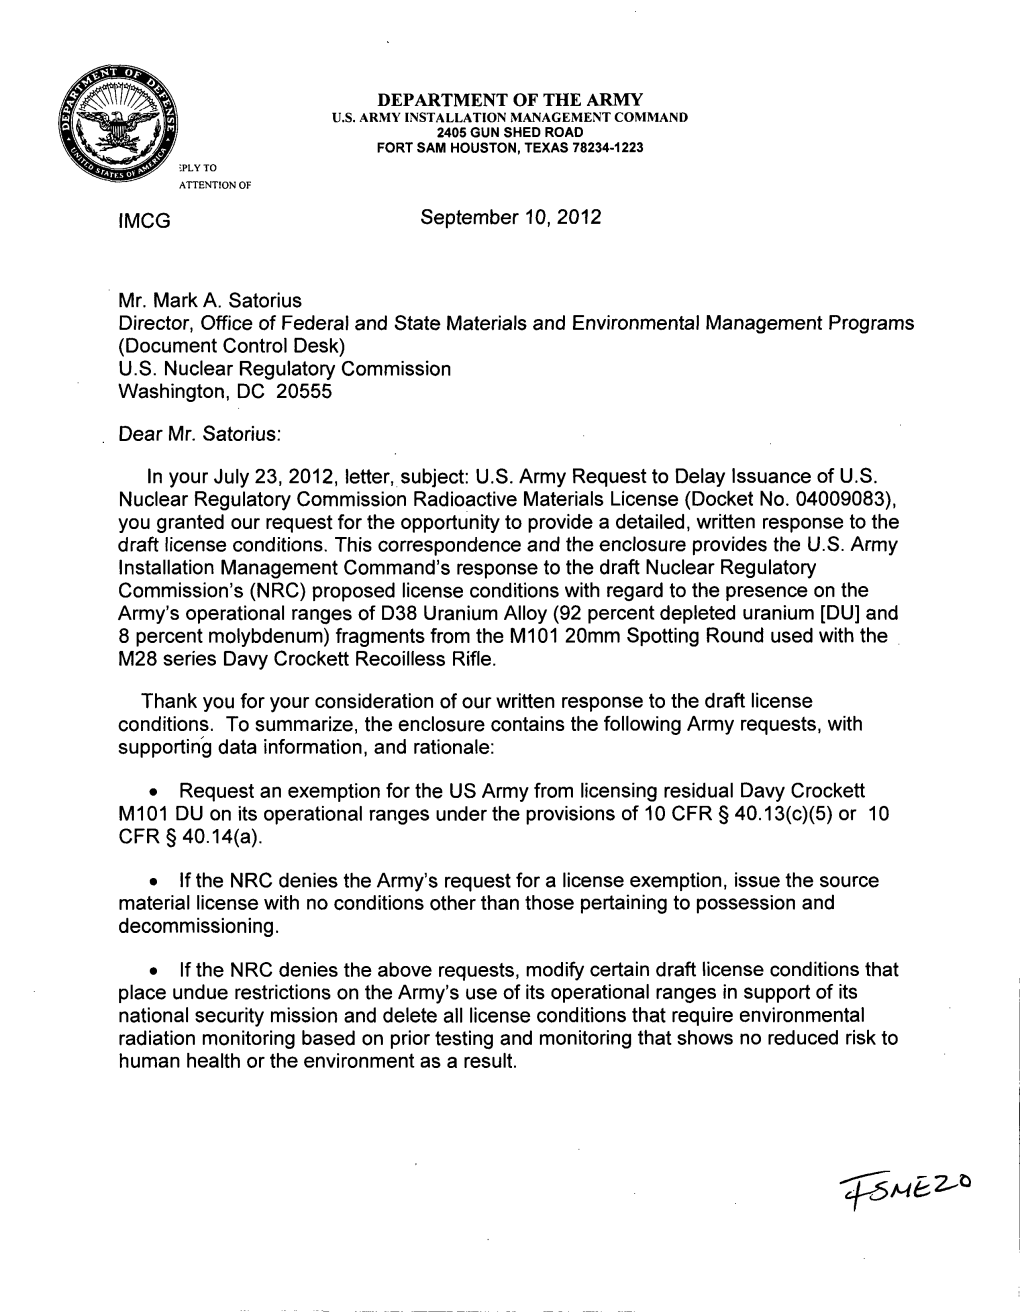 Letter from Michael Ferriter to Mark A. Satorius Regarding Additional